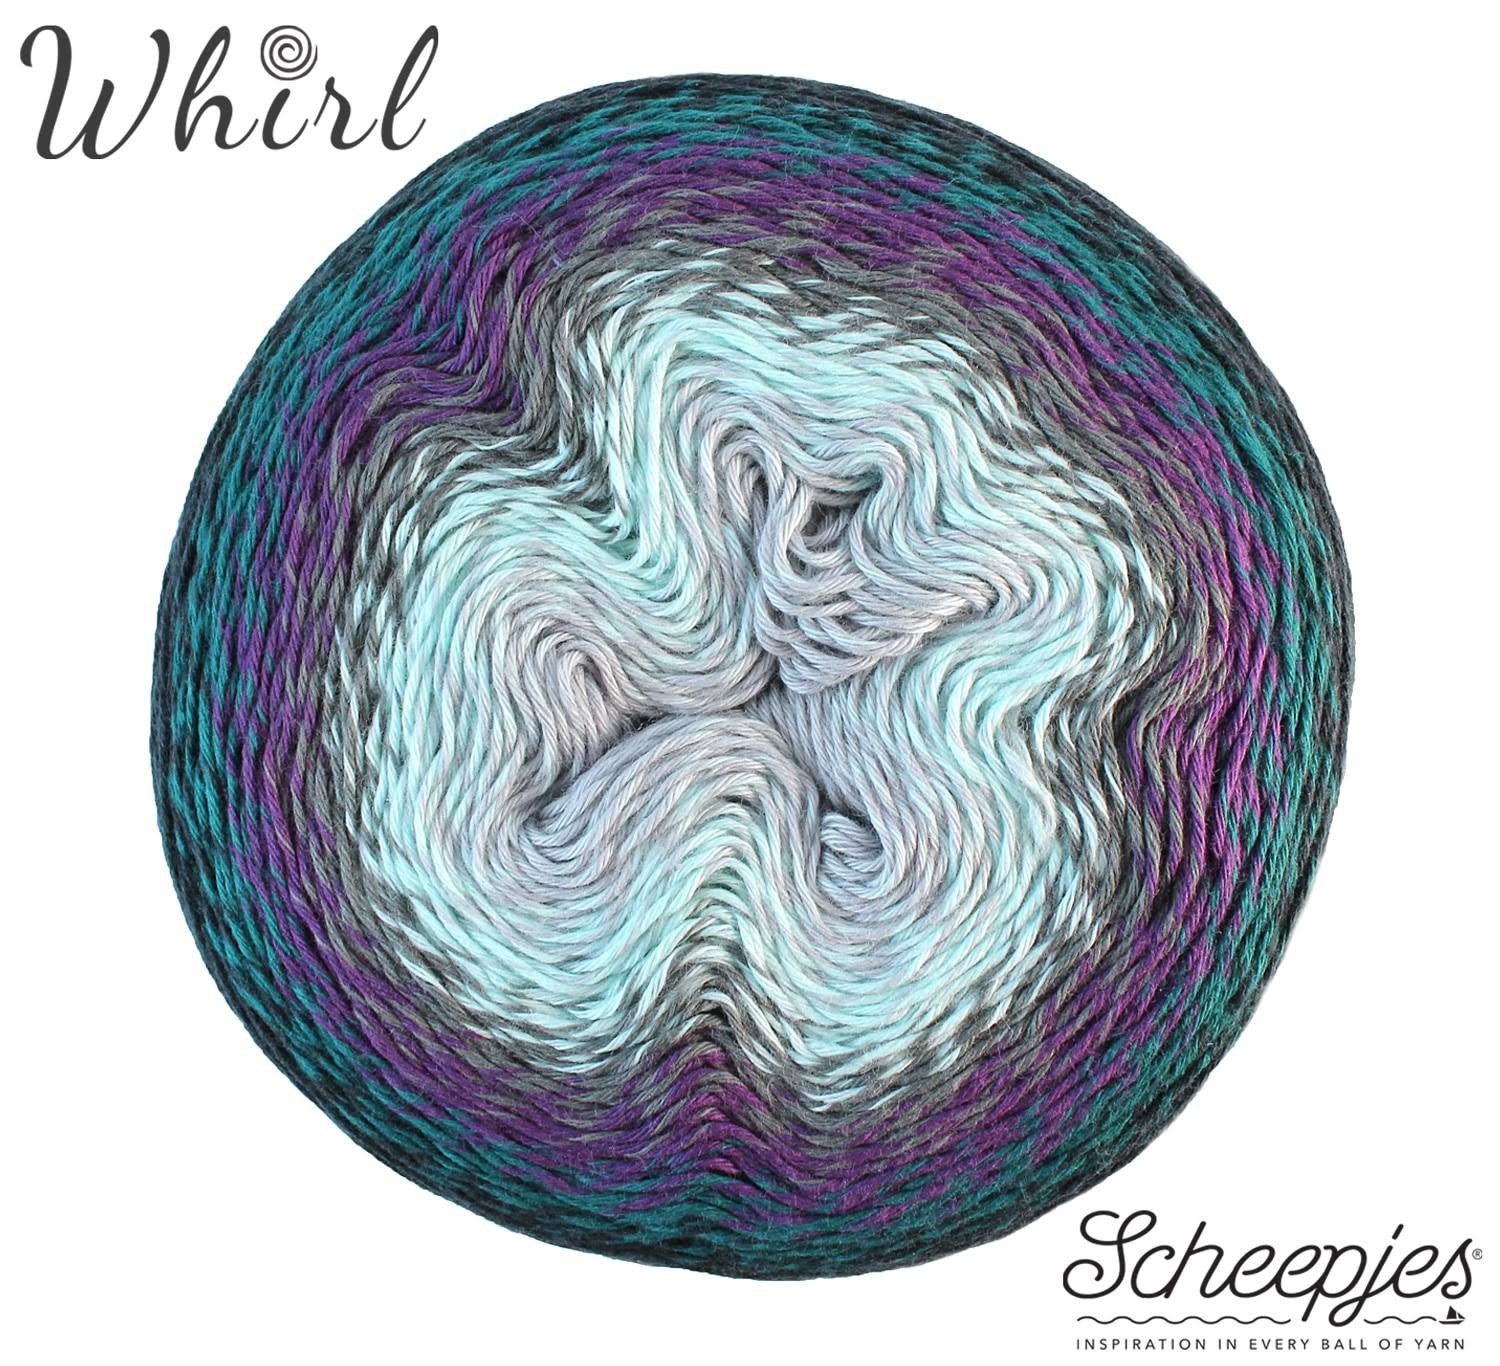 Scheepjes Whirl Print Yarn - 773 Black Currant Squeeze Me